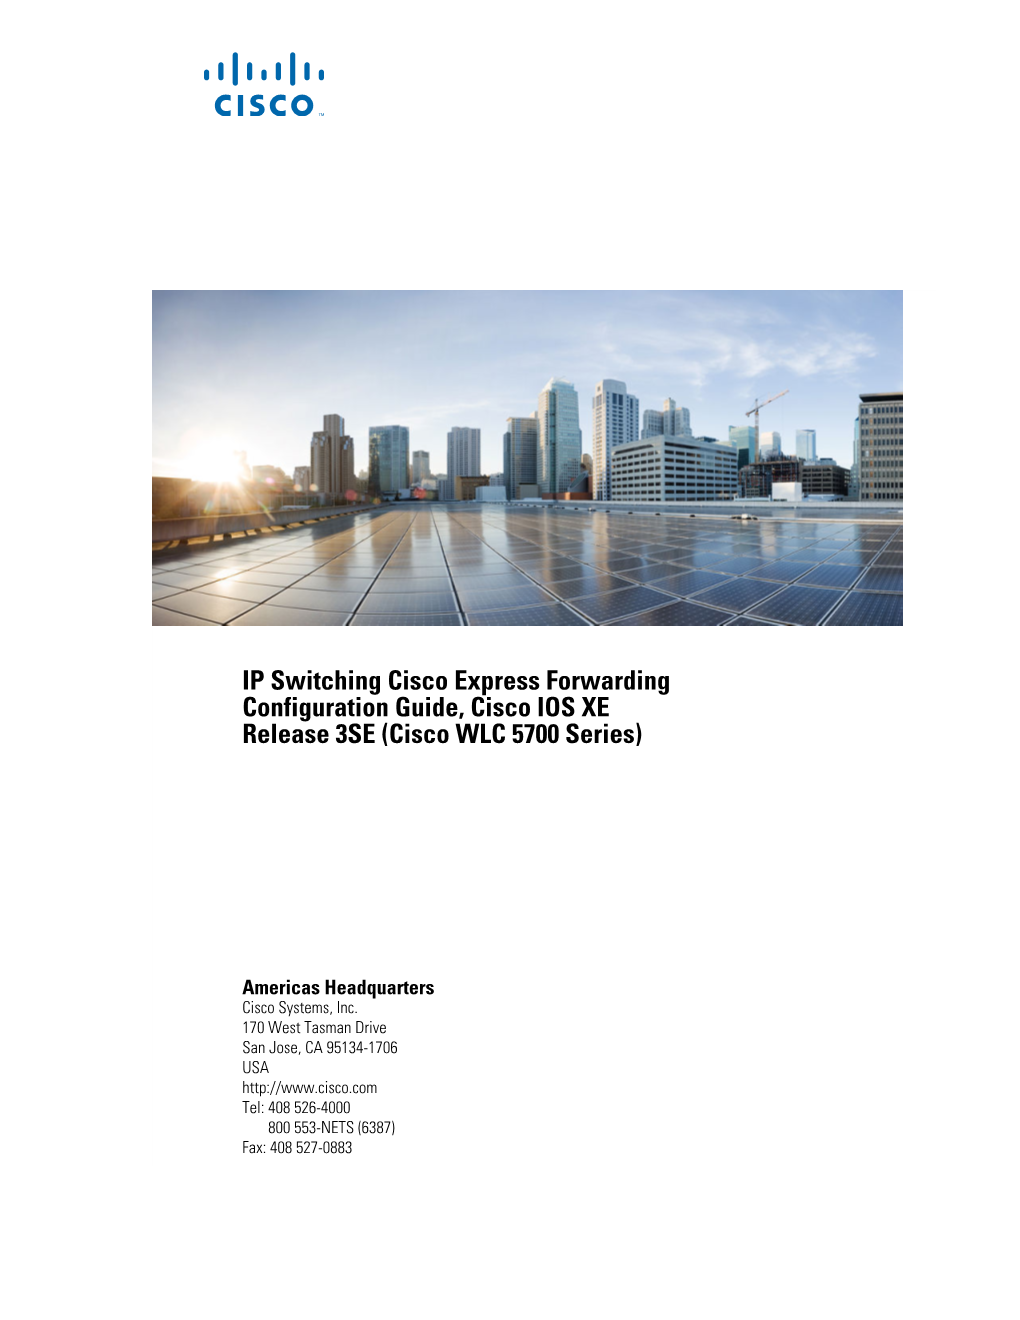 IP Switching Cisco Express Forwarding Configuration Guide, Cisco IOS XE Release 3SE (Cisco WLC 5700 Series)